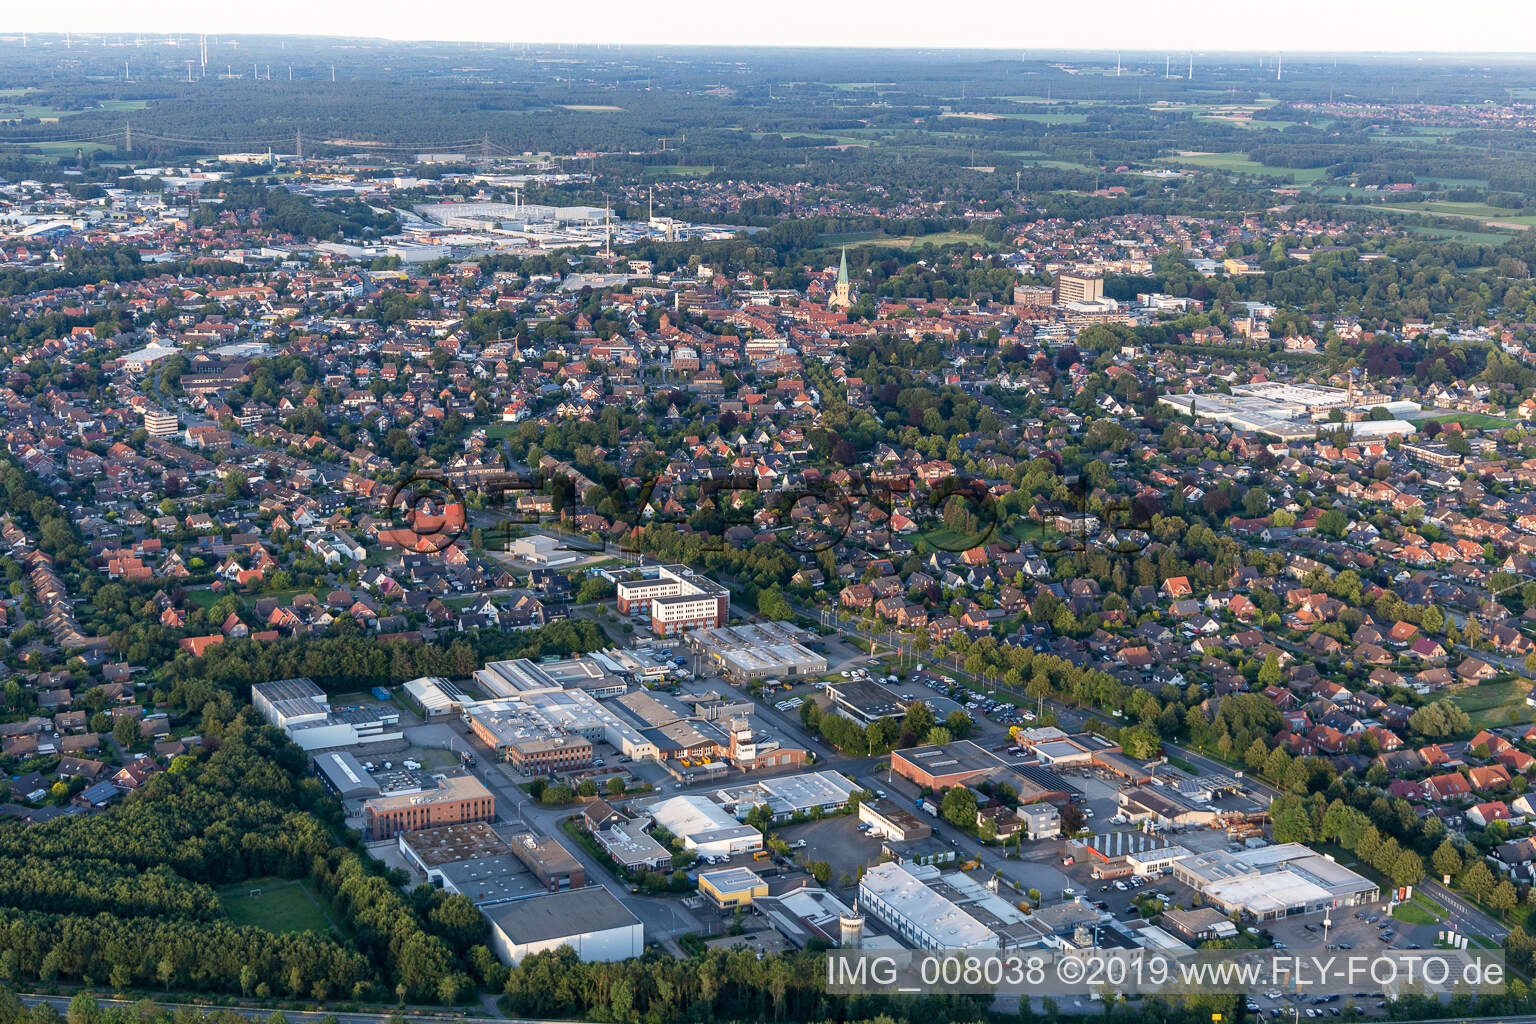 Aerial view of Borken in the state North Rhine-Westphalia, Germany